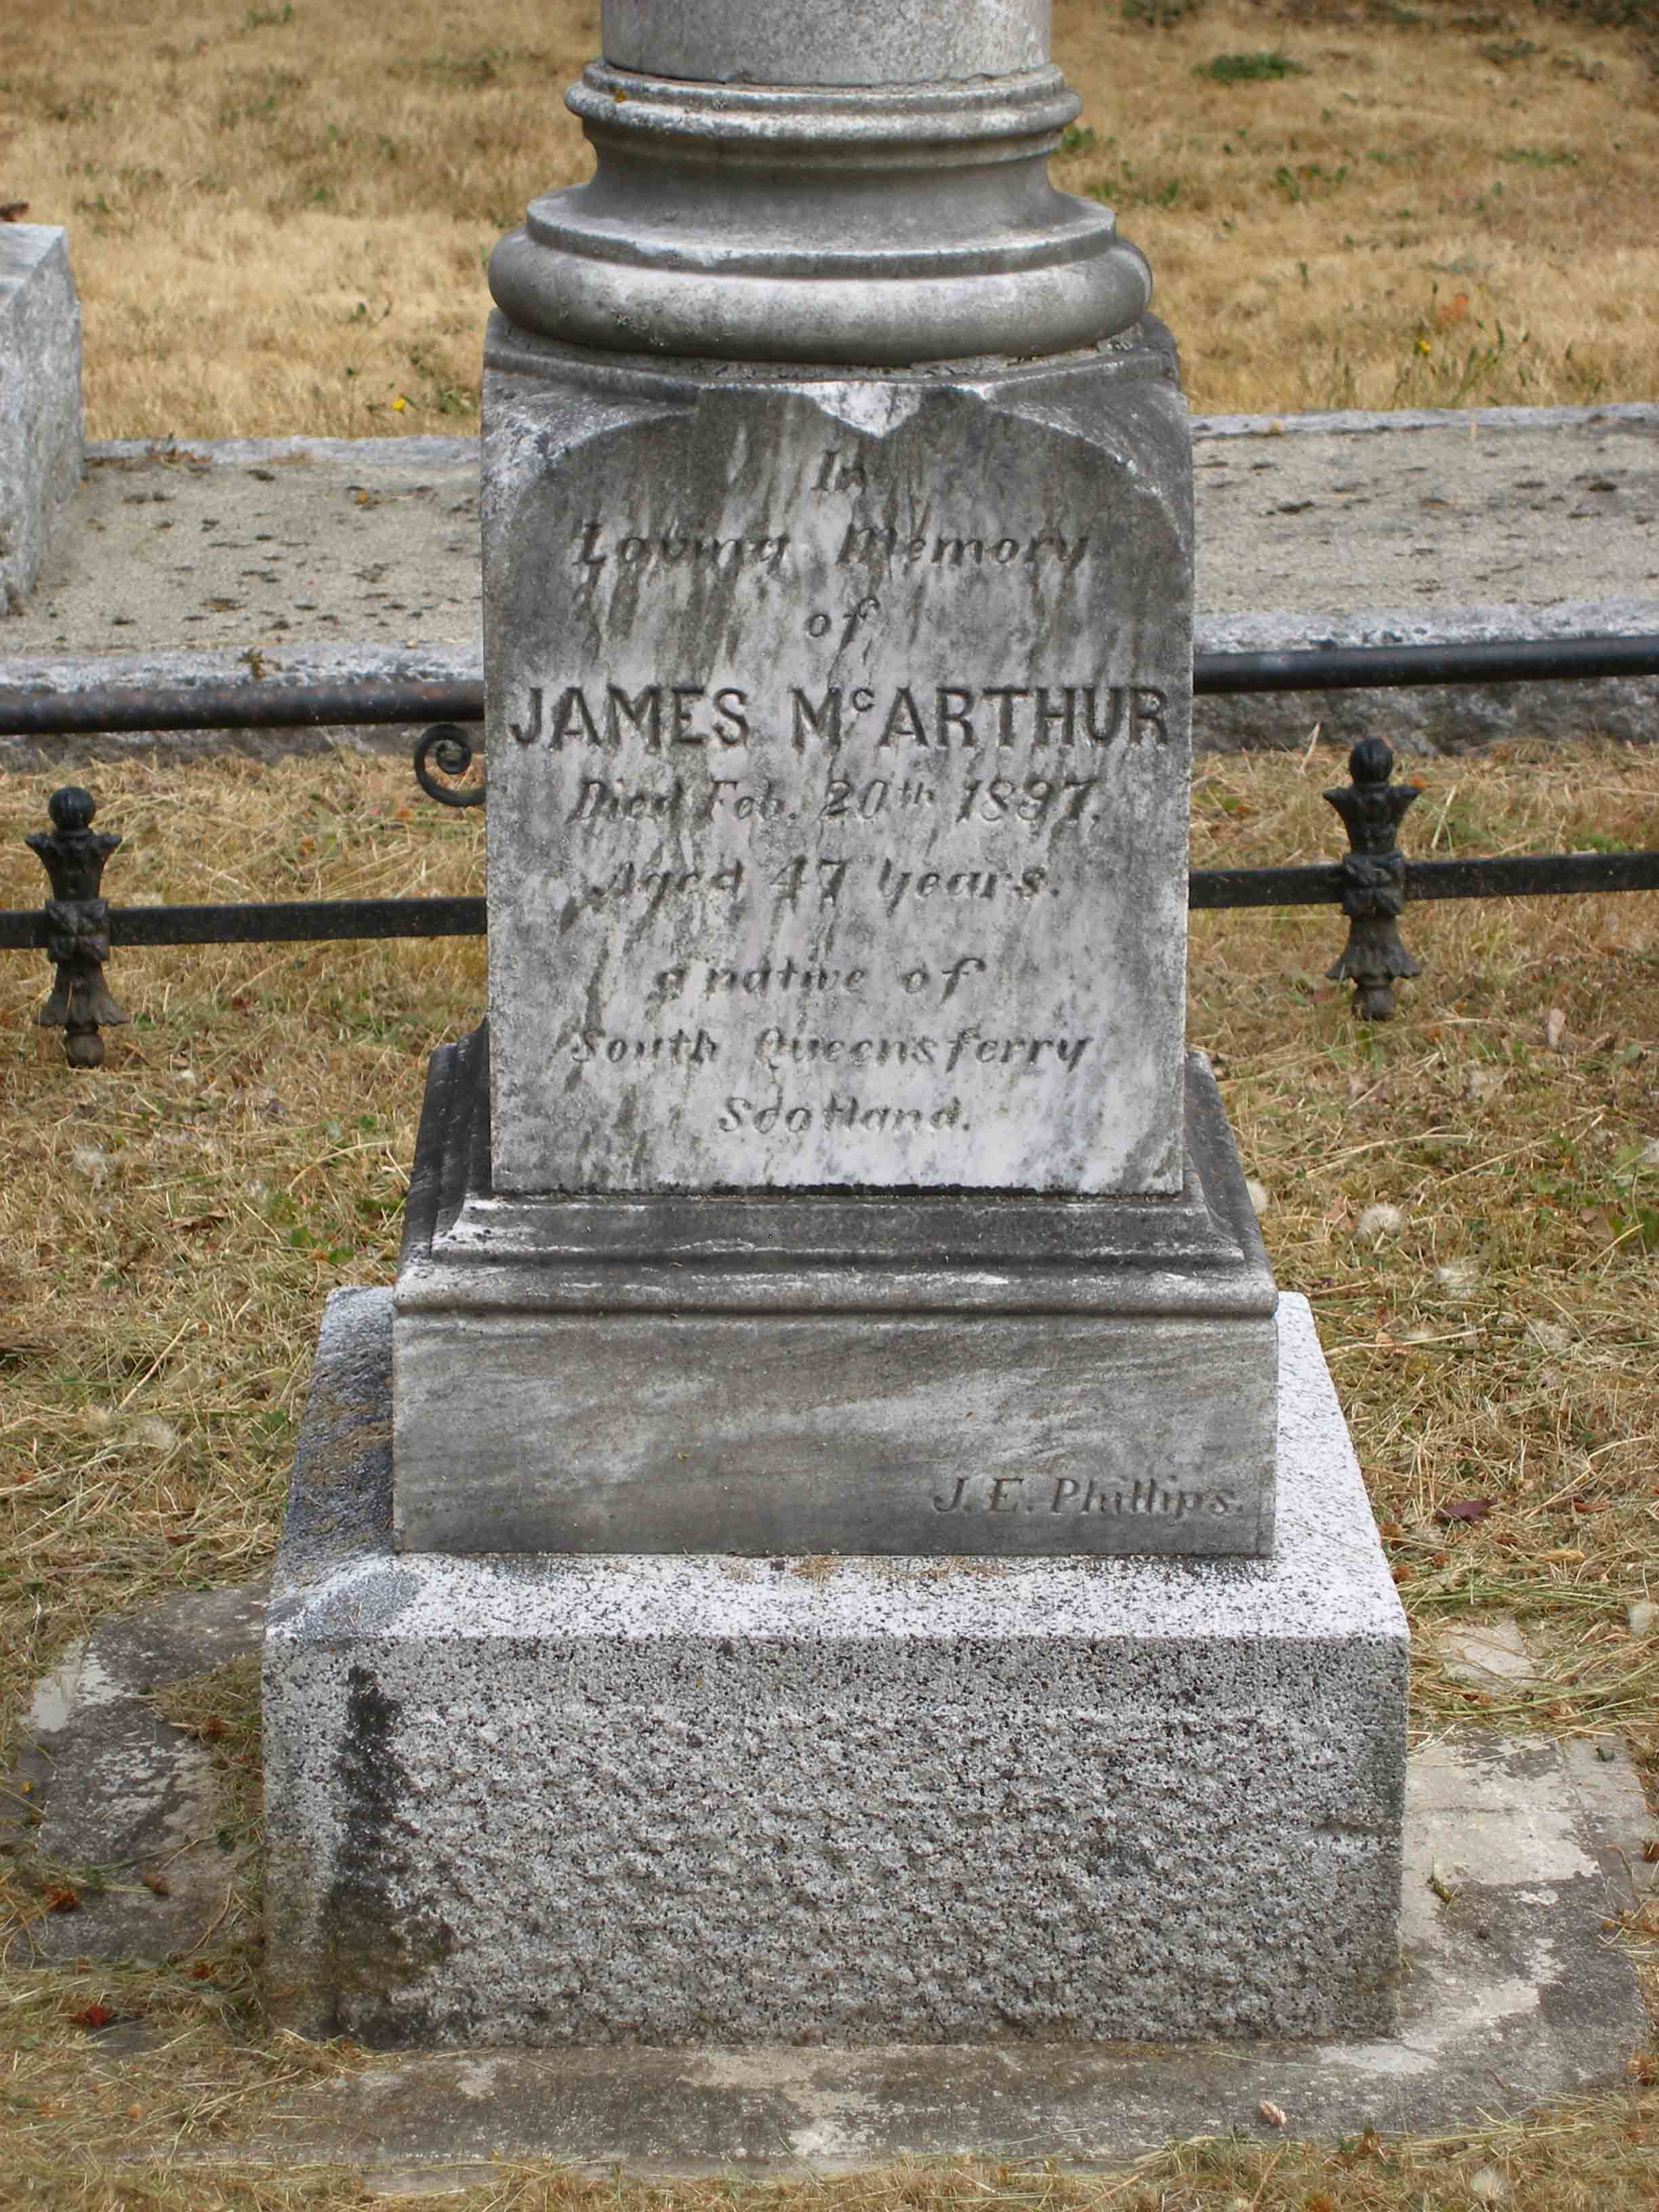 James McArthur tomb inscription